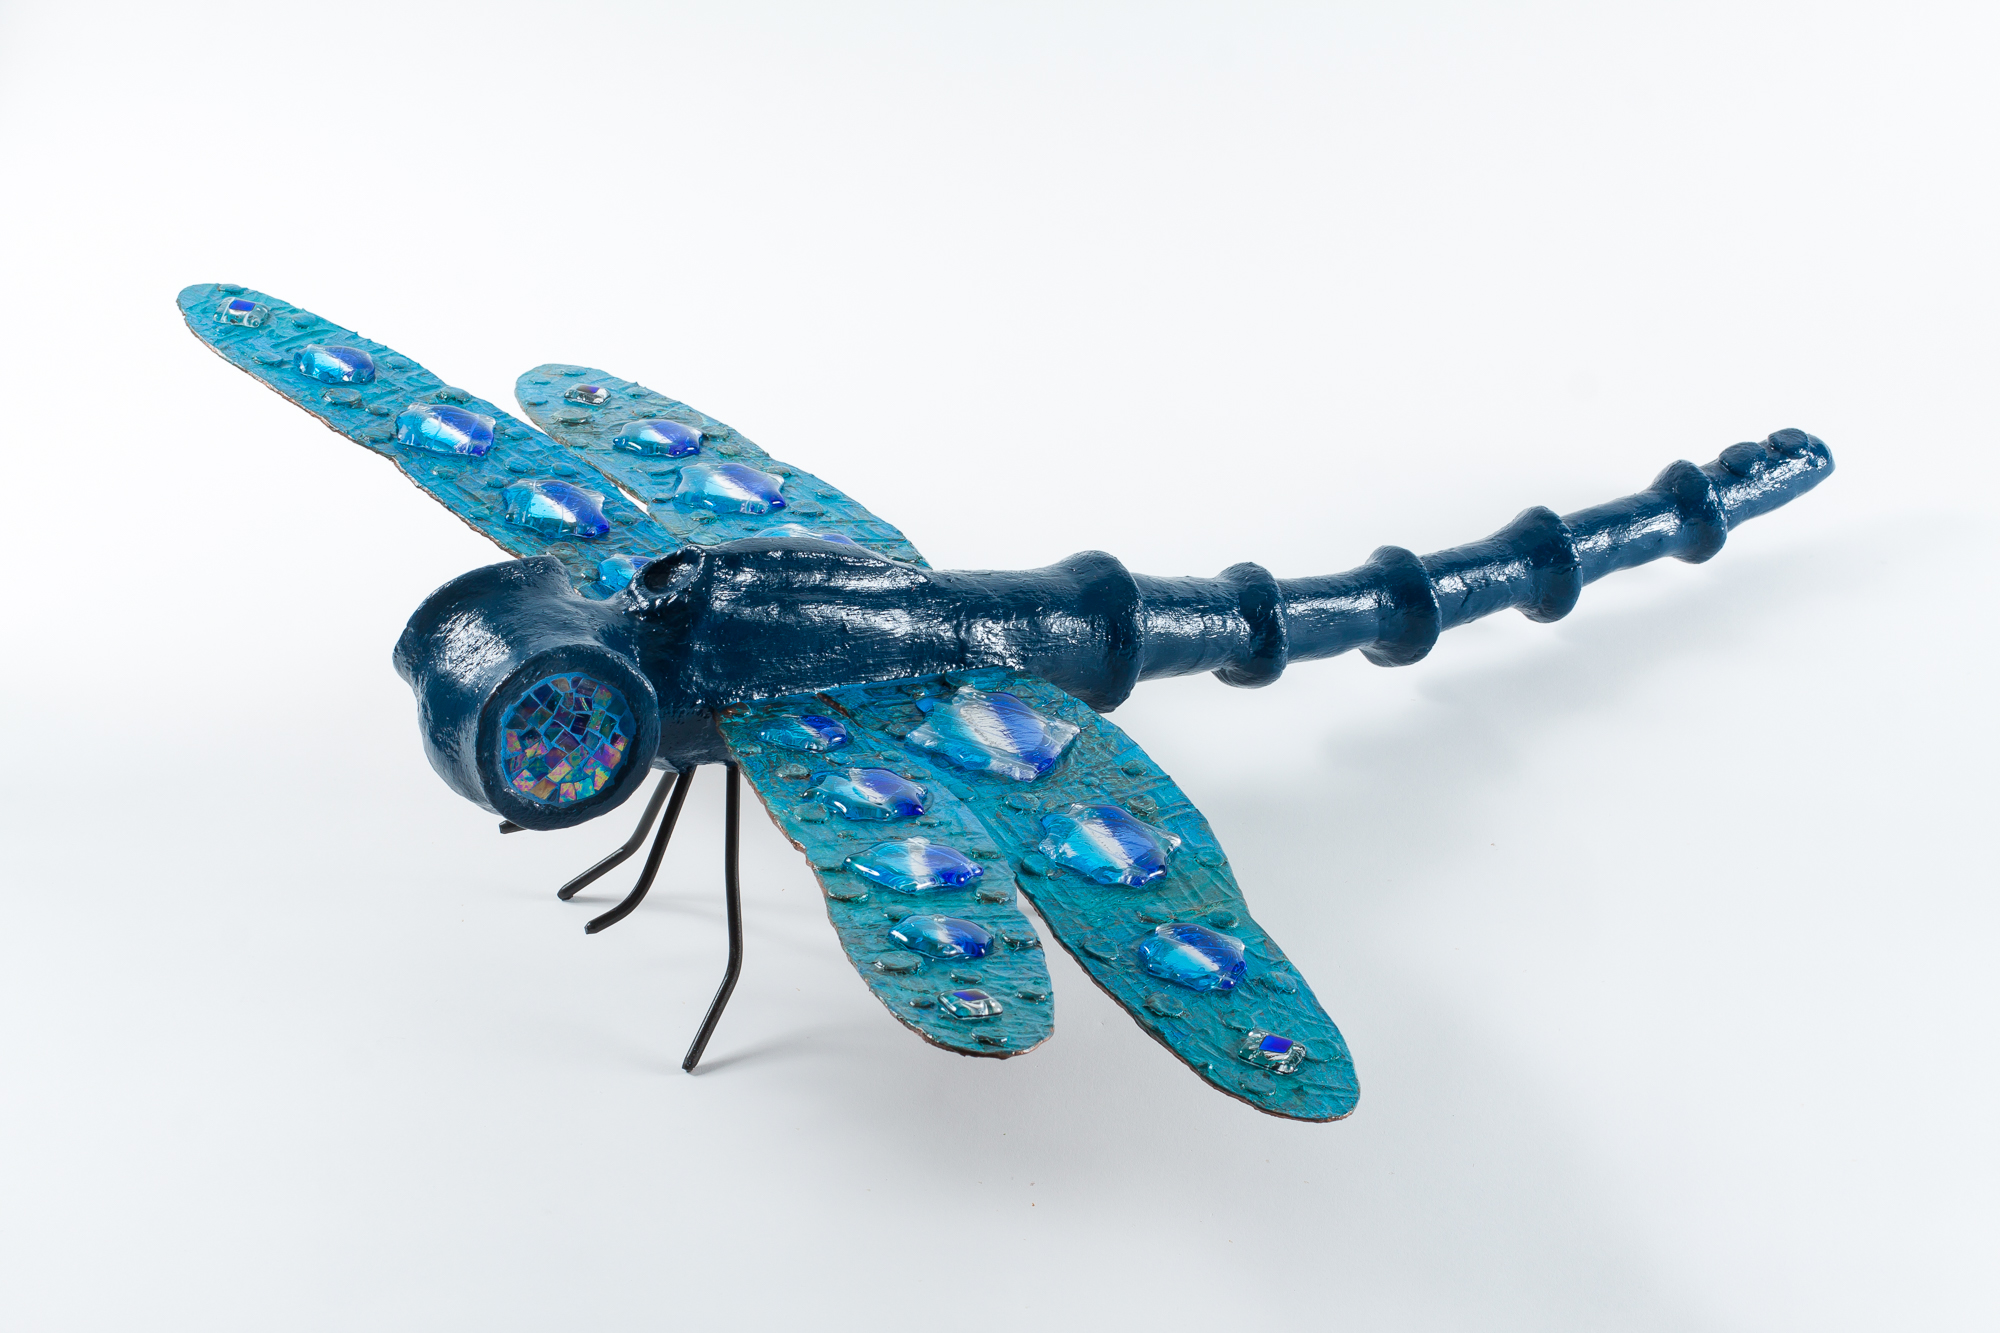 Dragonfly Sculptures | Outdoor Art, Indoor Art, and Everything In ...